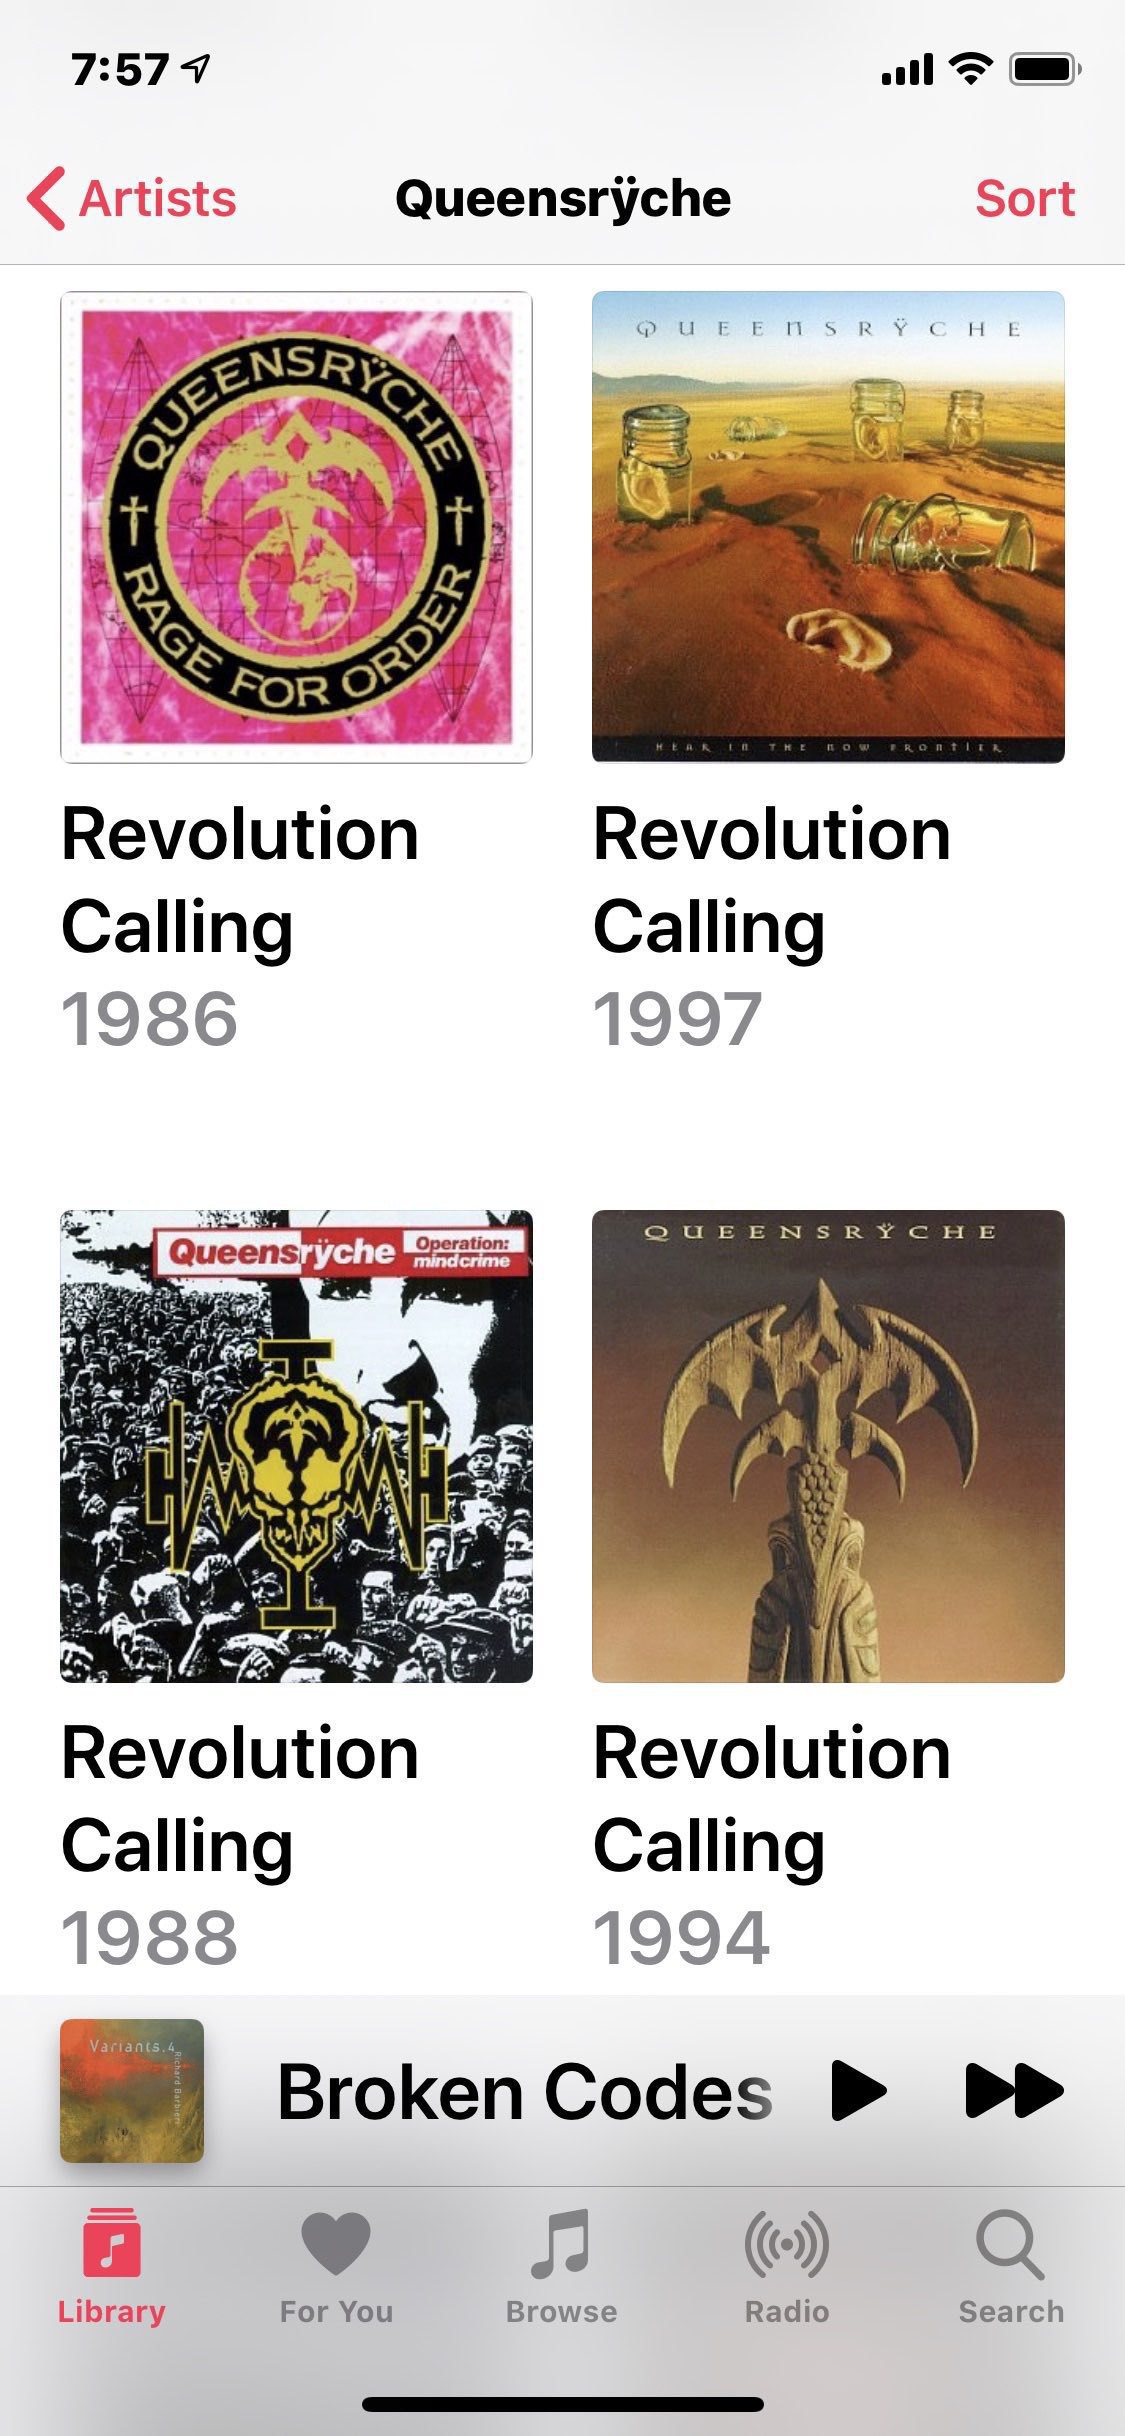 Queensrÿche albums all named "Revolution Calling"